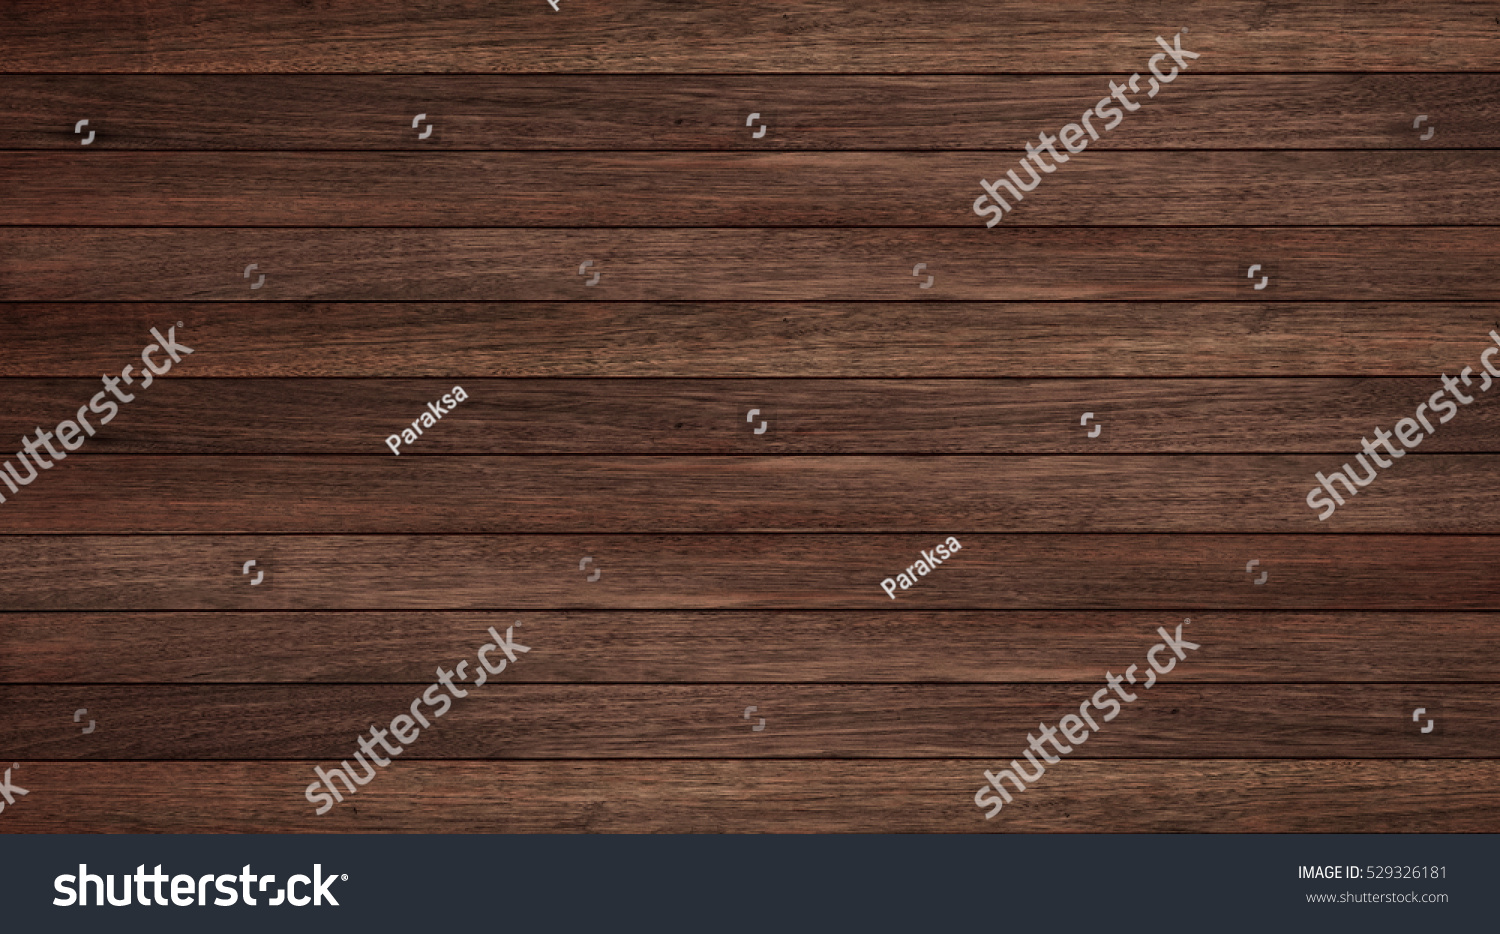 Wood texture background, wood planks  #529326181